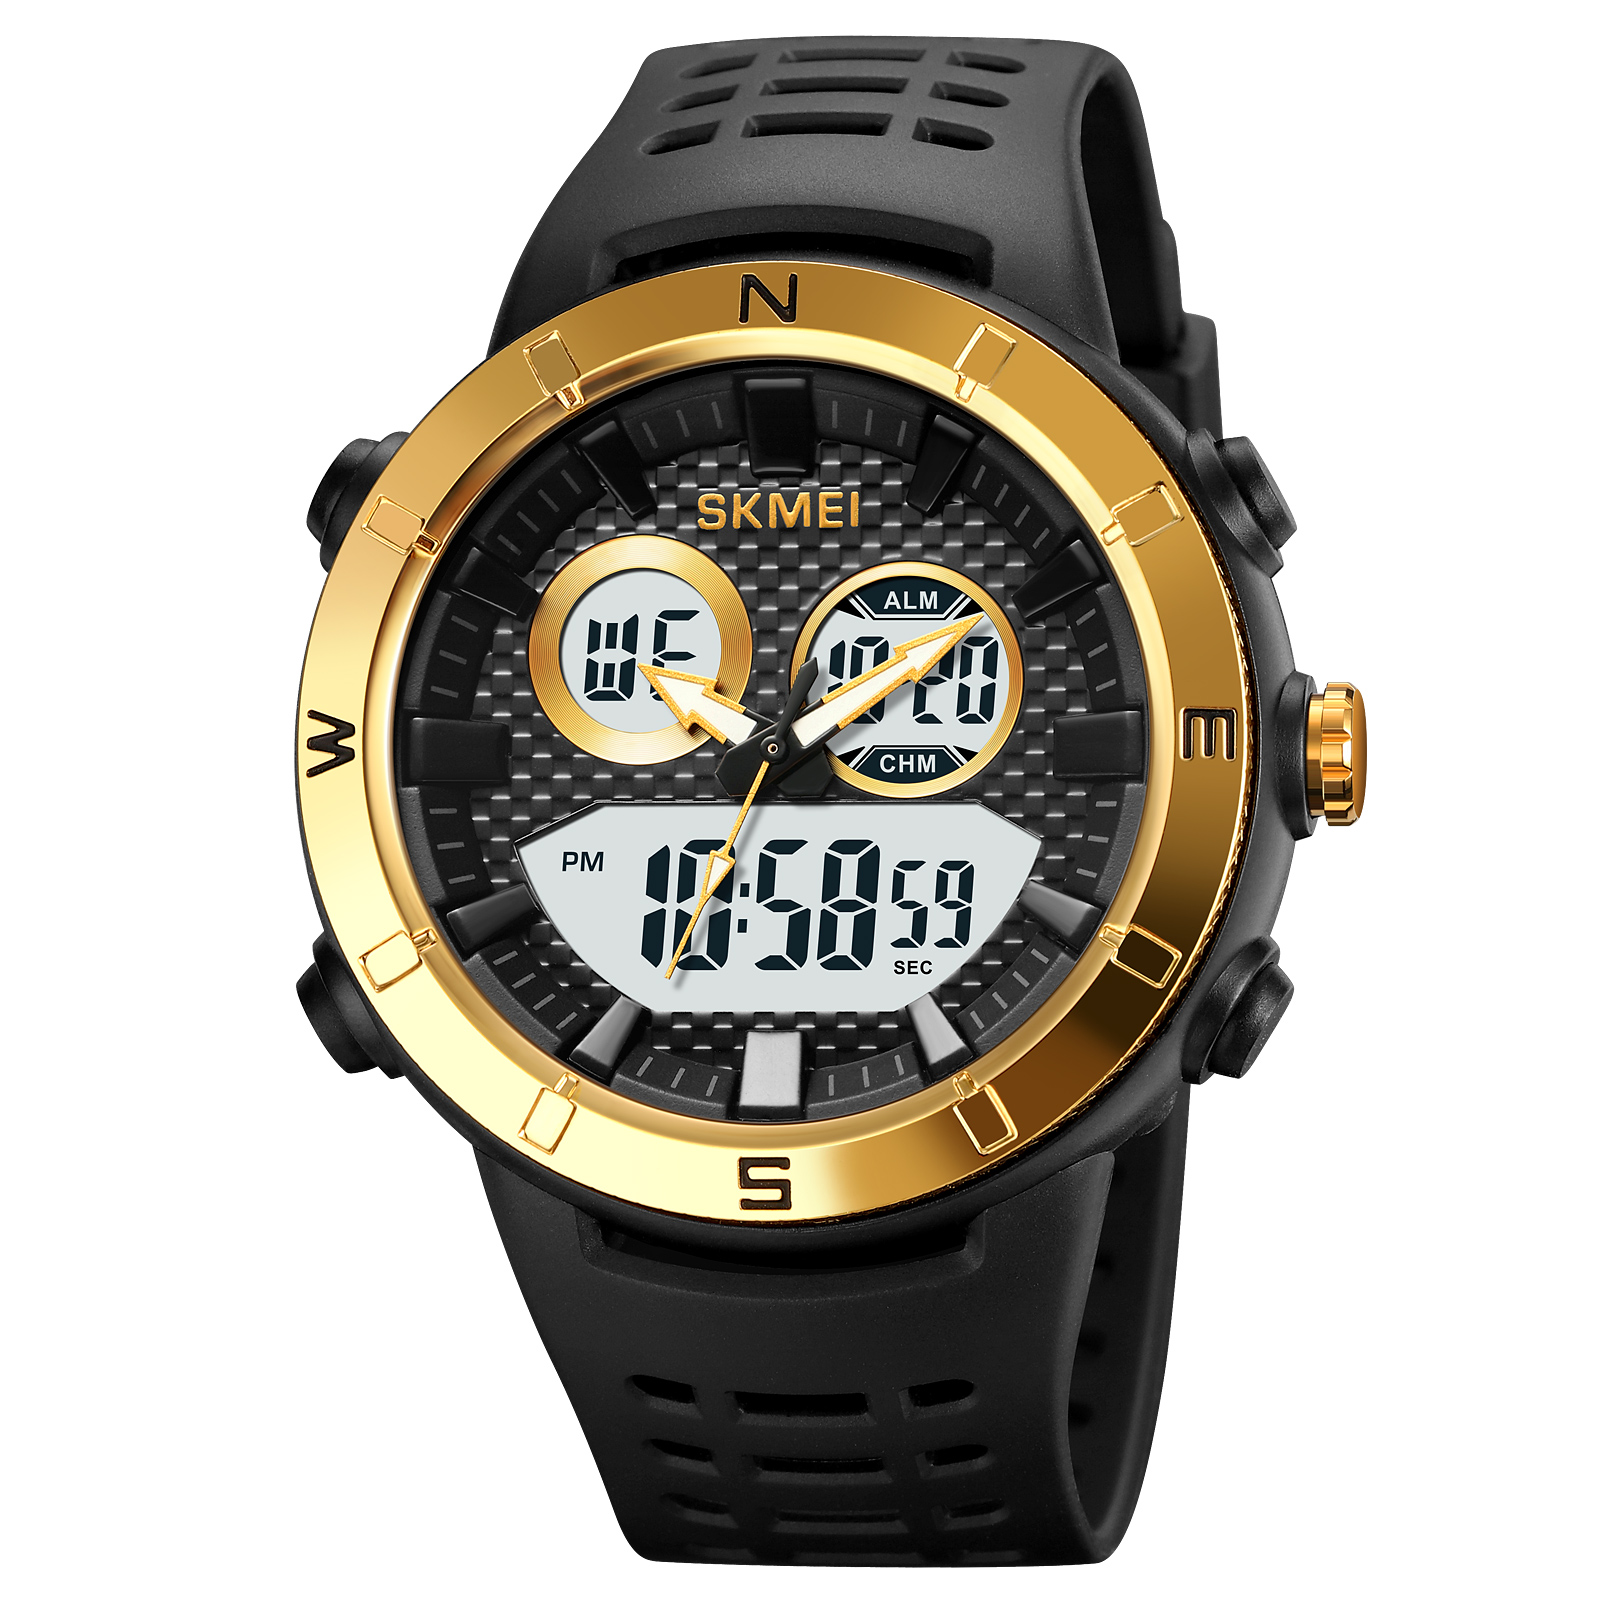 Sport waterproof watches-Skmei Watch Manufacture Co.,Ltd